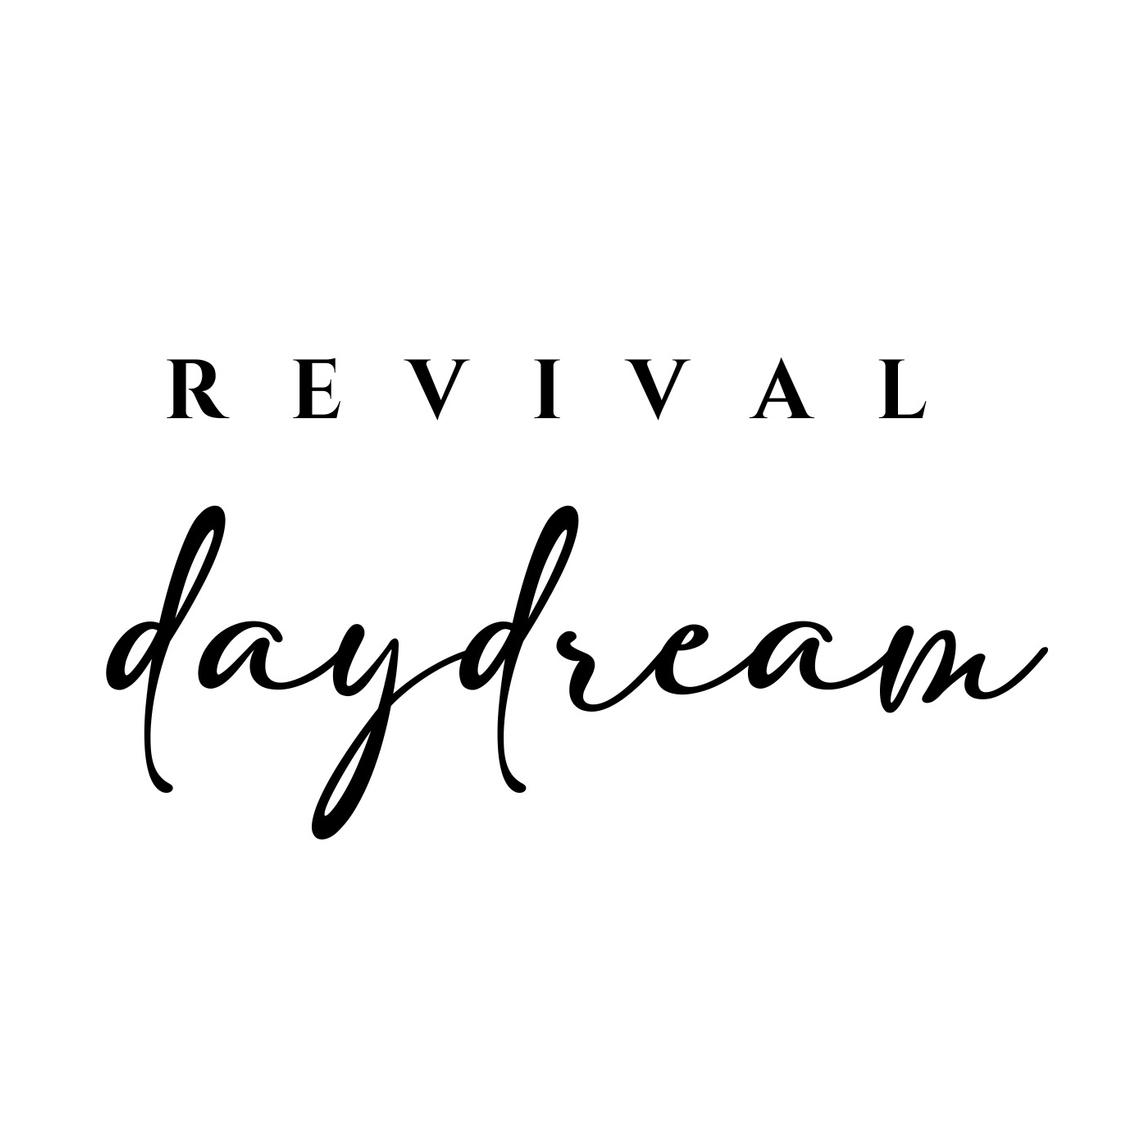 RevivalDaydream's images